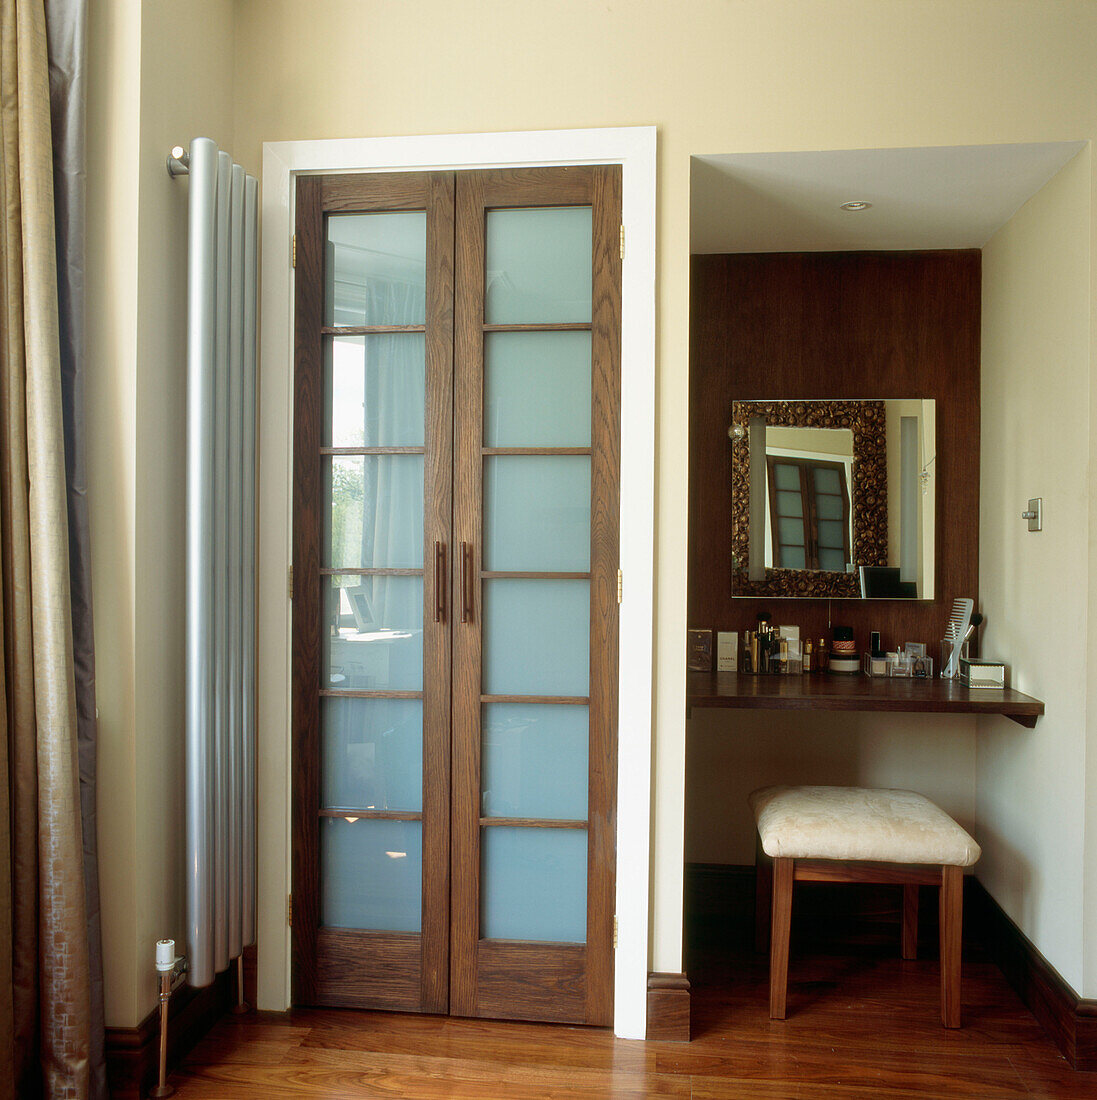 En suite bathroom in dark walnut with bespoke dressing table and double doors